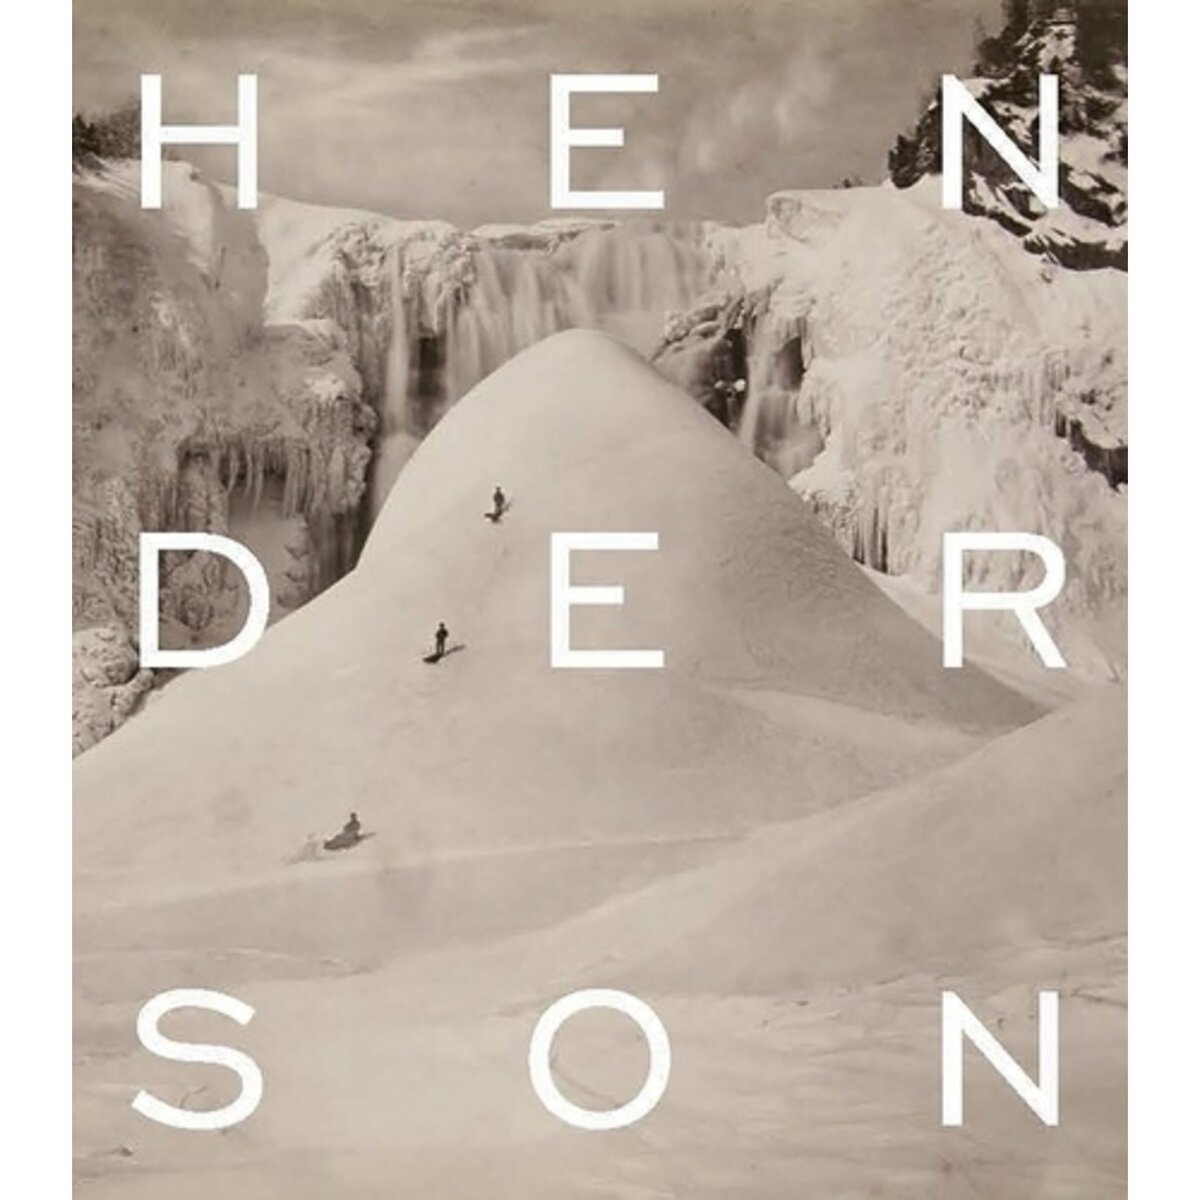  ALEXANDER HENDERSON. ART ET NATURE, Samson Hélène